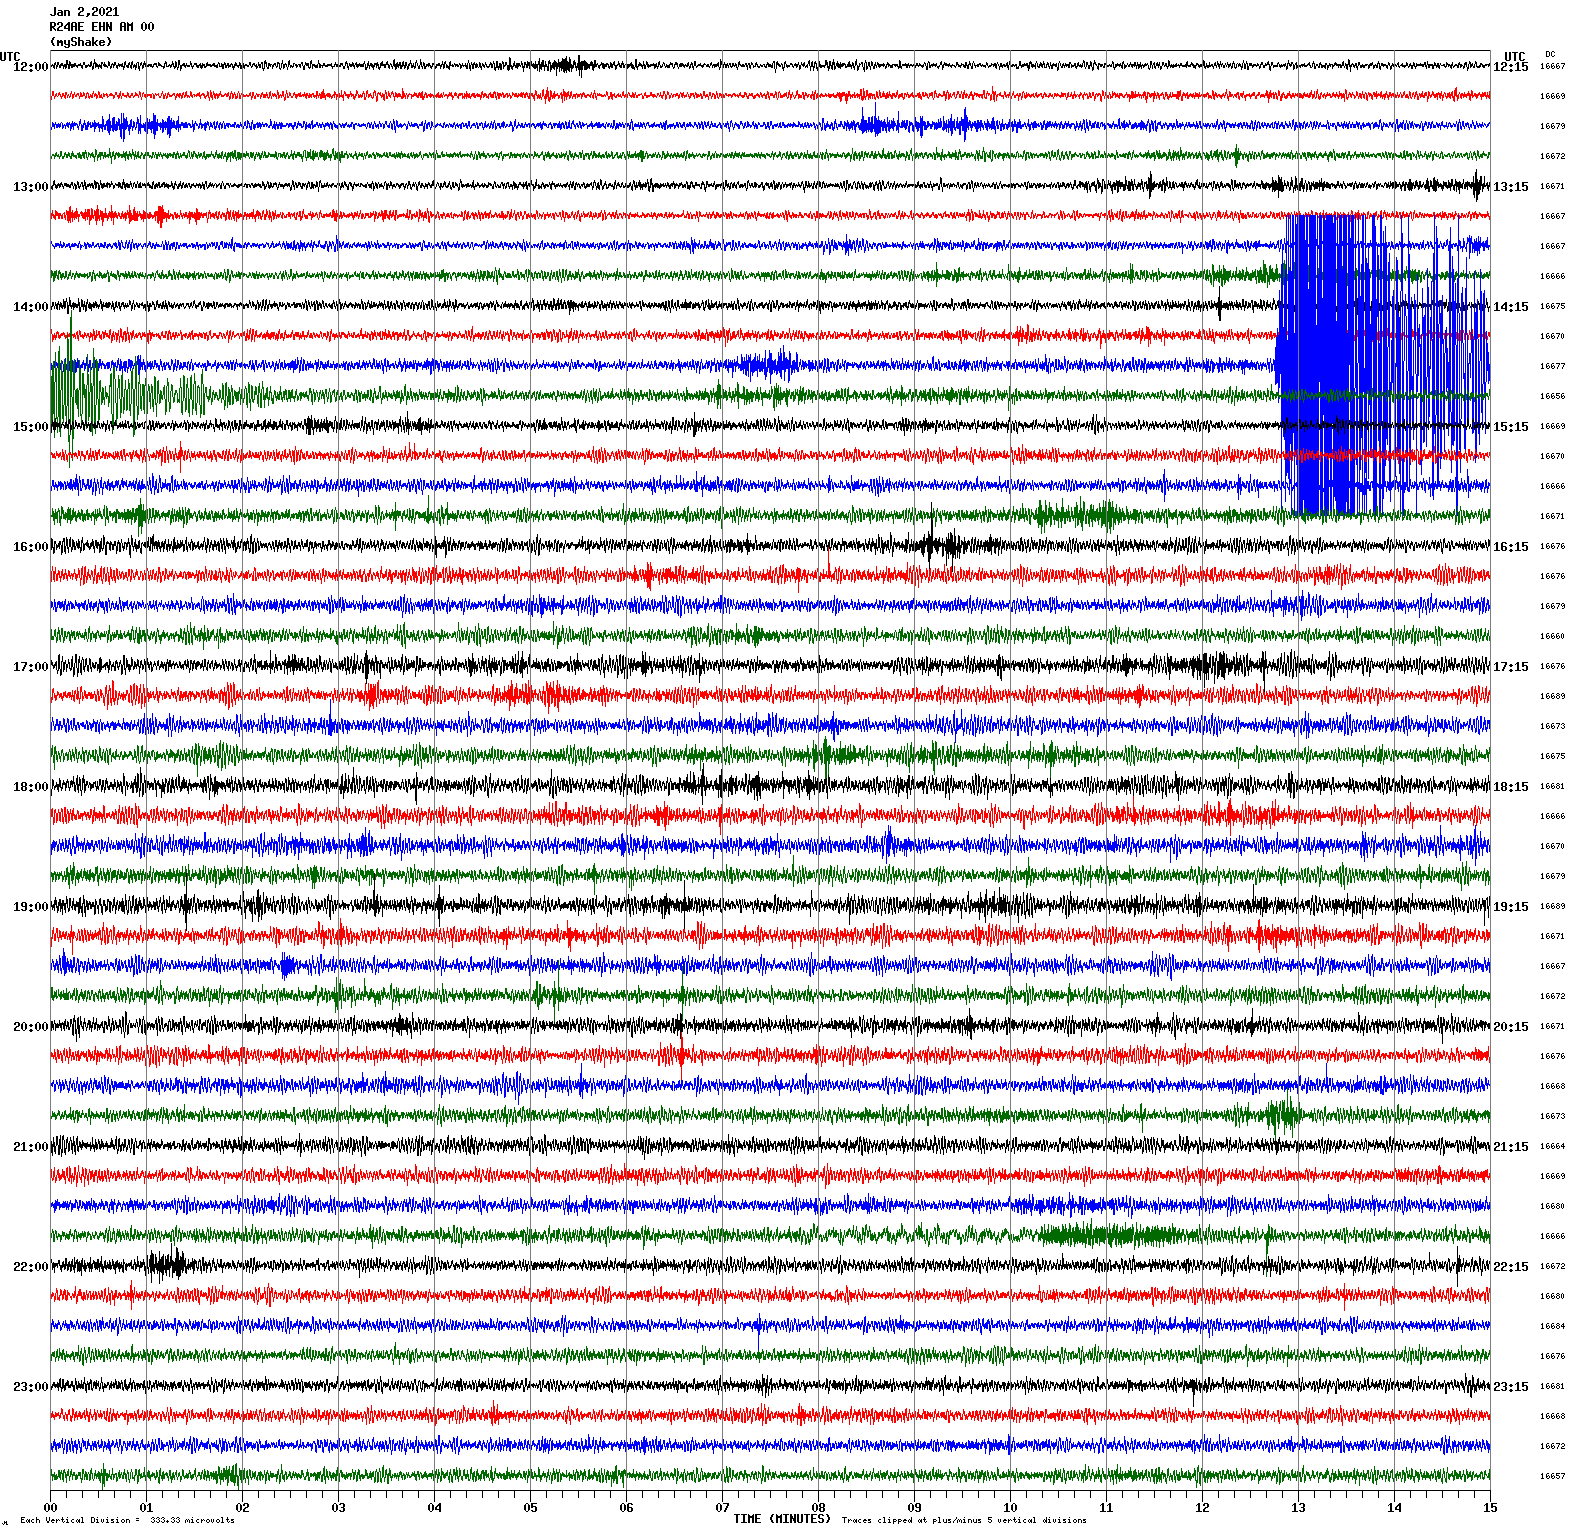 /seismic-data/R24AE/R24AE_EHN_AM_00.2021010212.gif